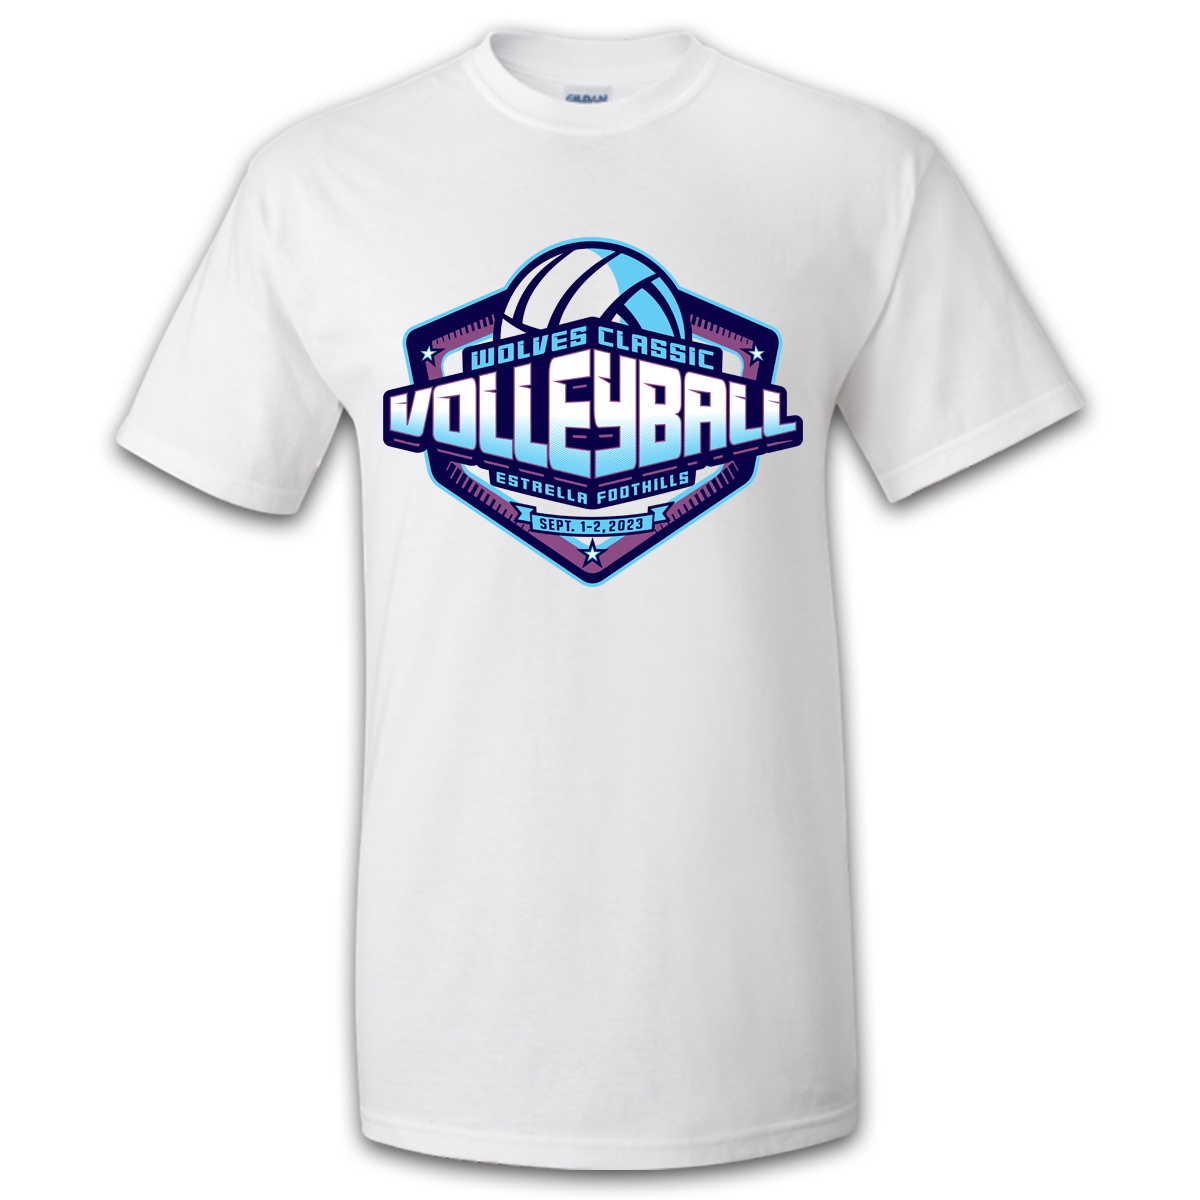 2023 Estrella Foothills Wolves Classic Volleyball Tournament T-Shirt